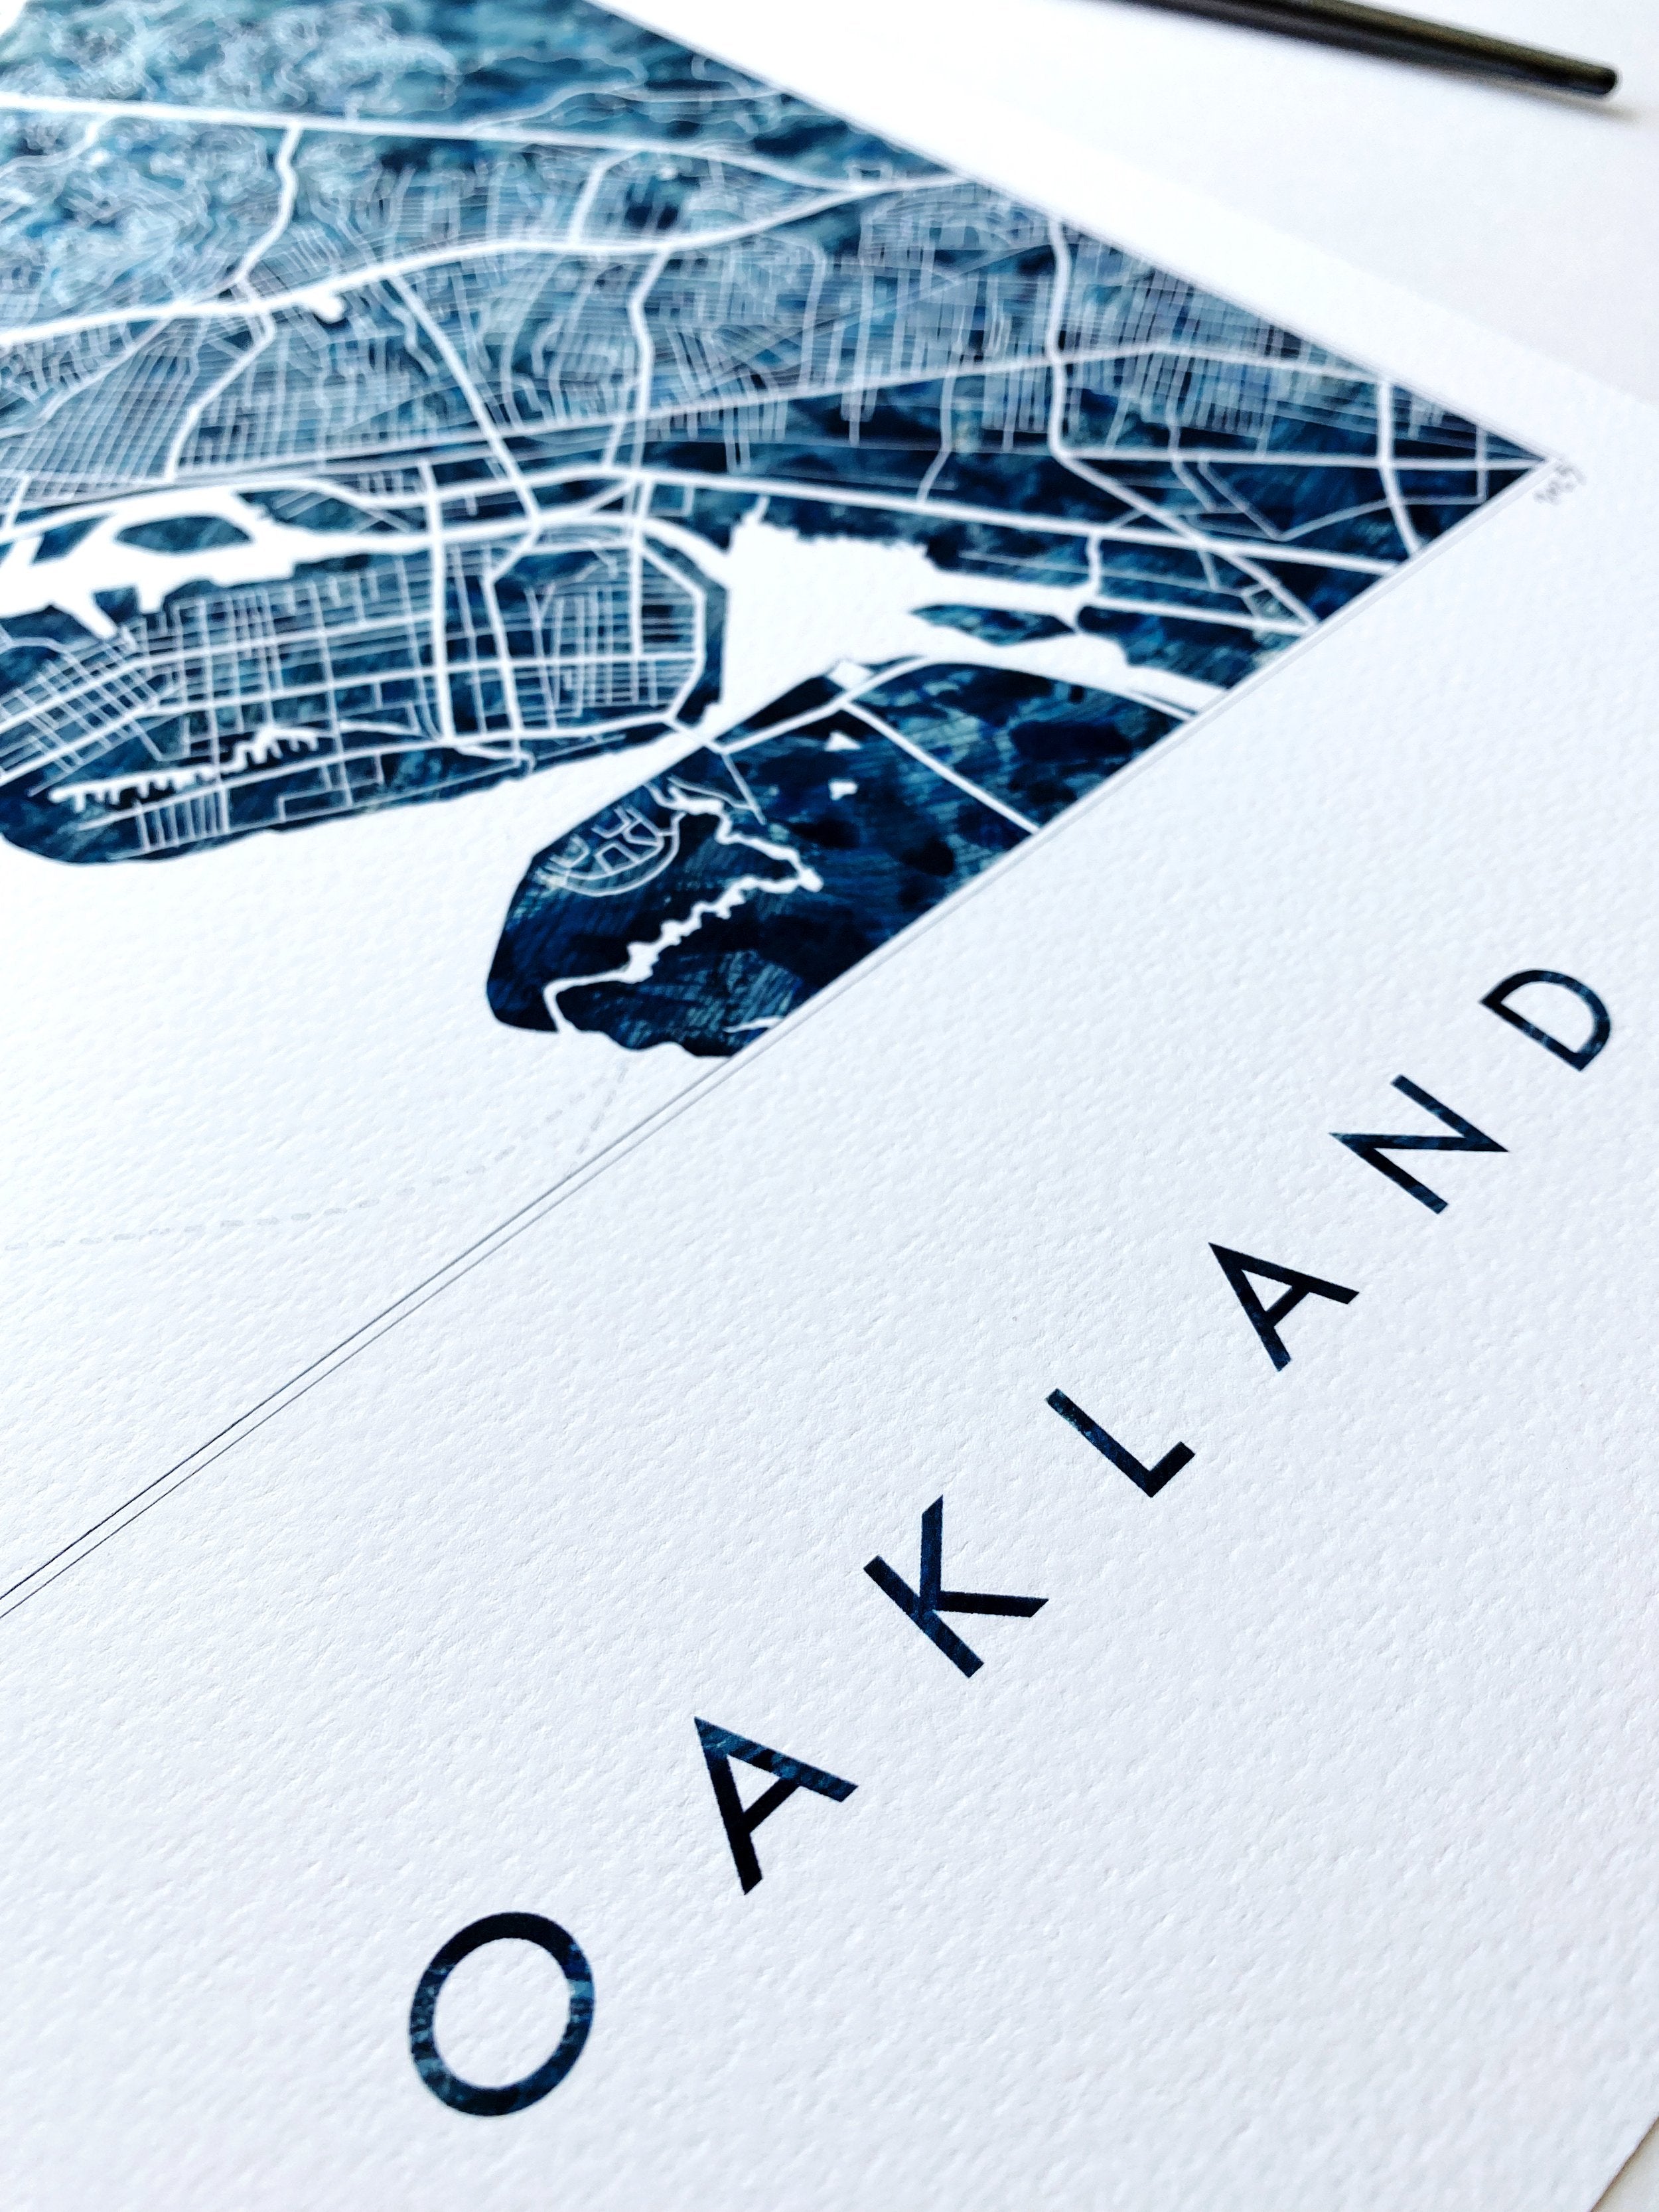 OAKLAND, California Urban Fabrics City Map: PRINT